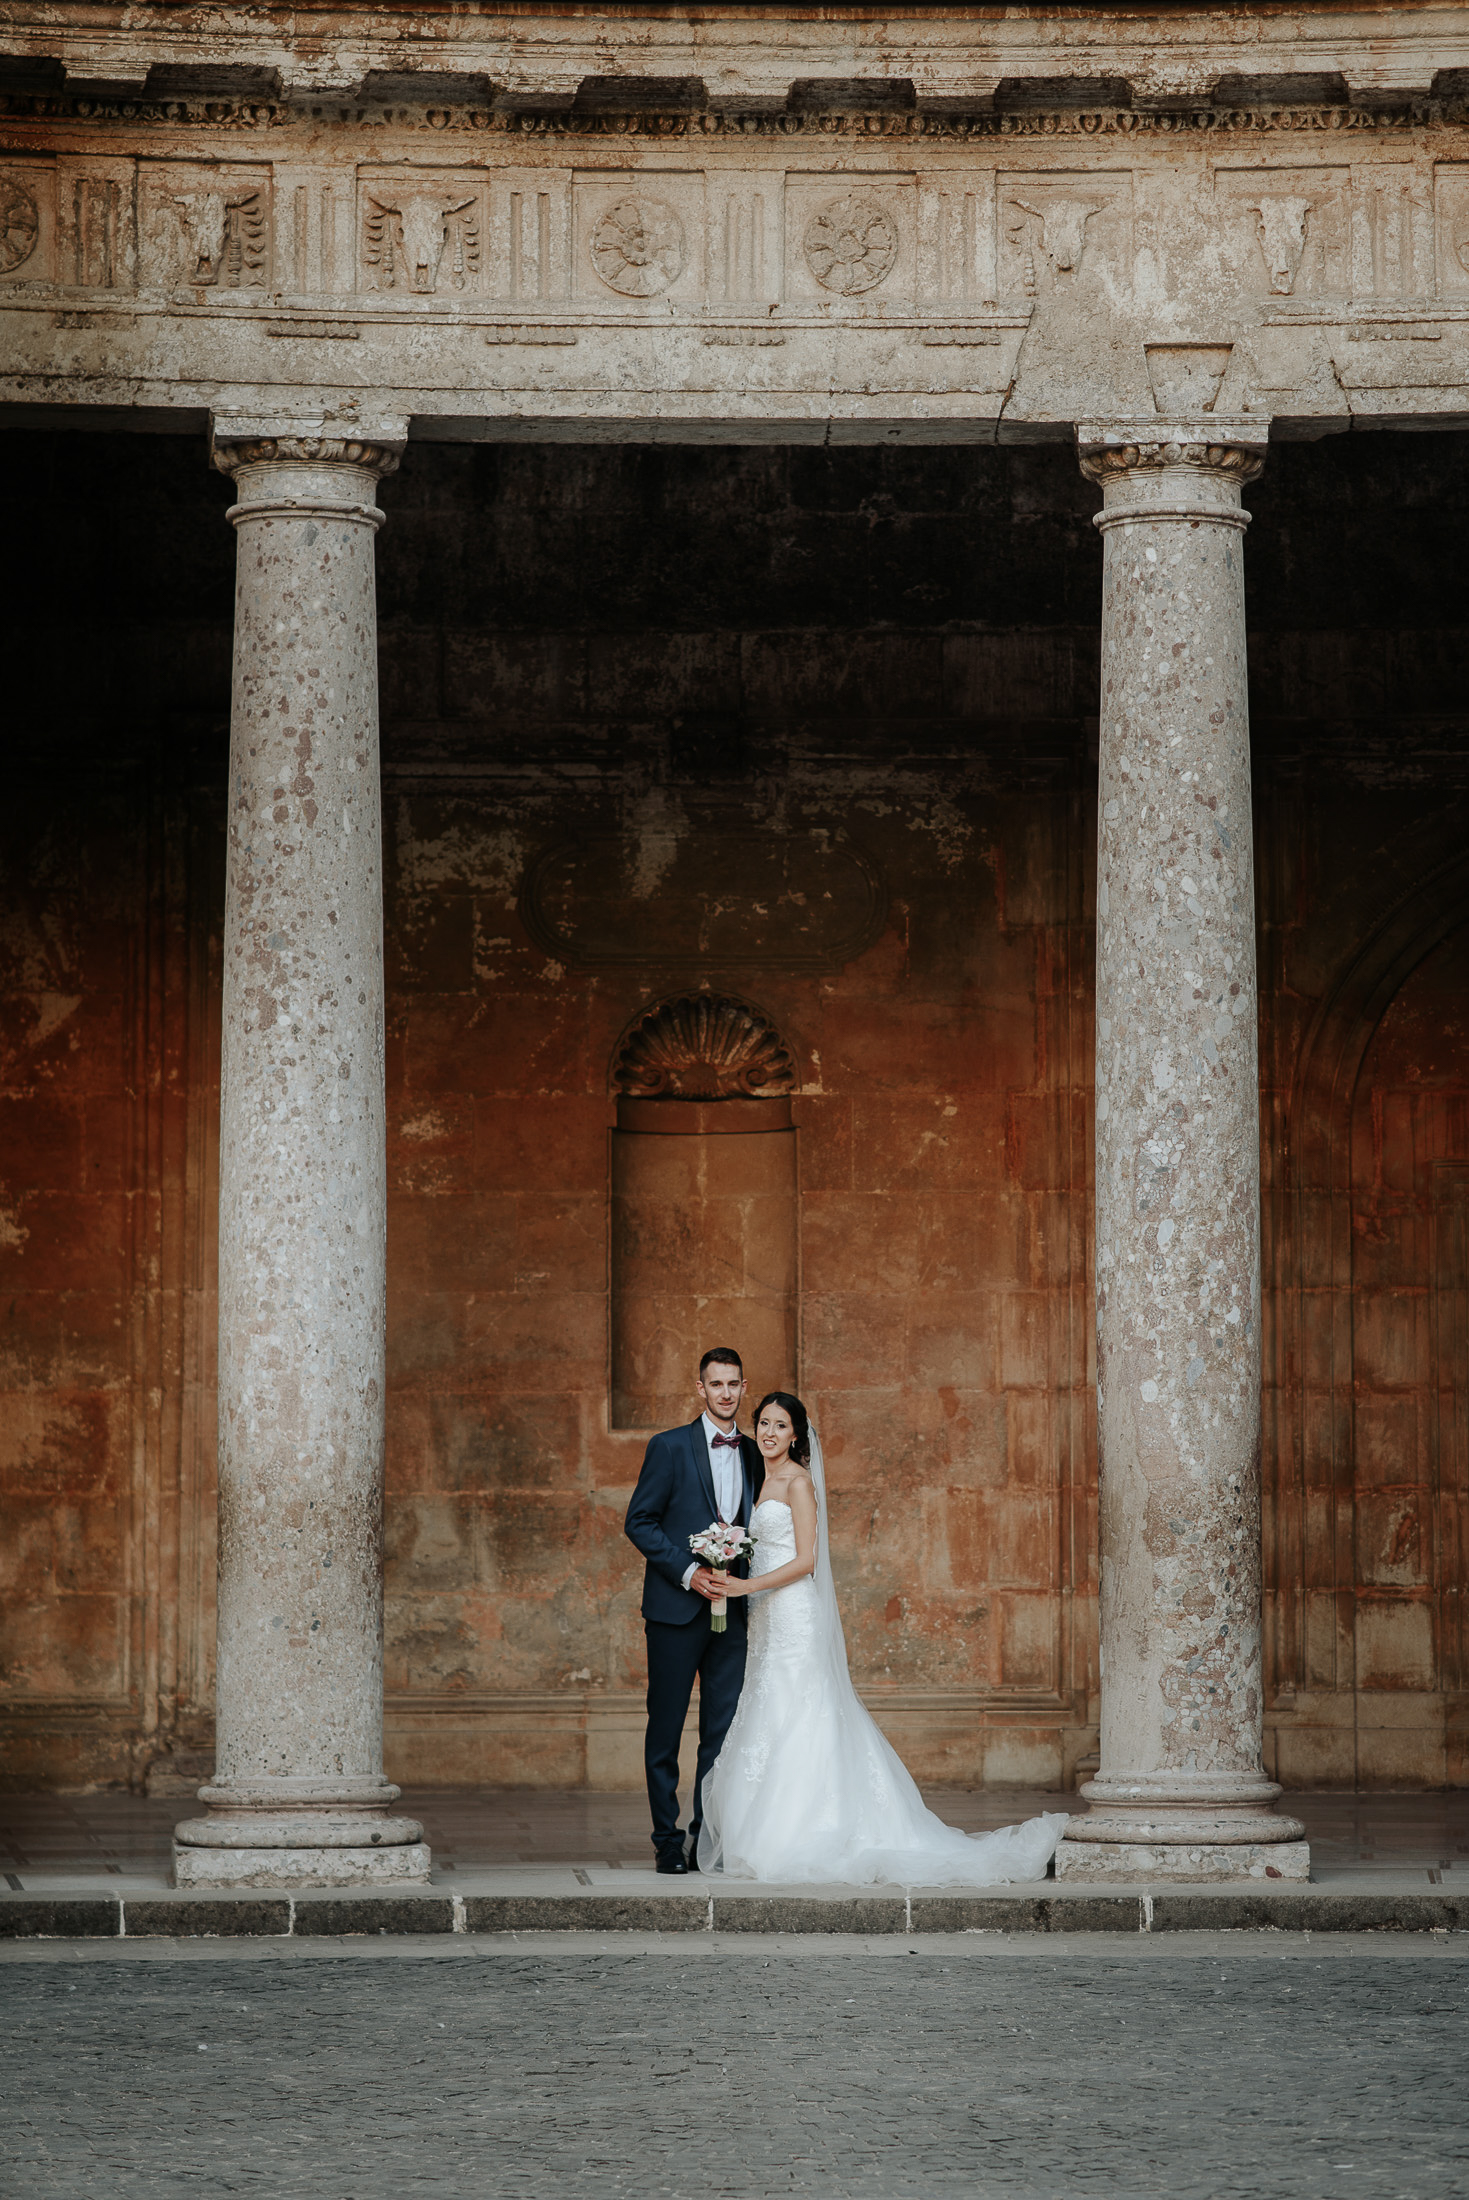 Post Wedding photo shooting in Alhambra